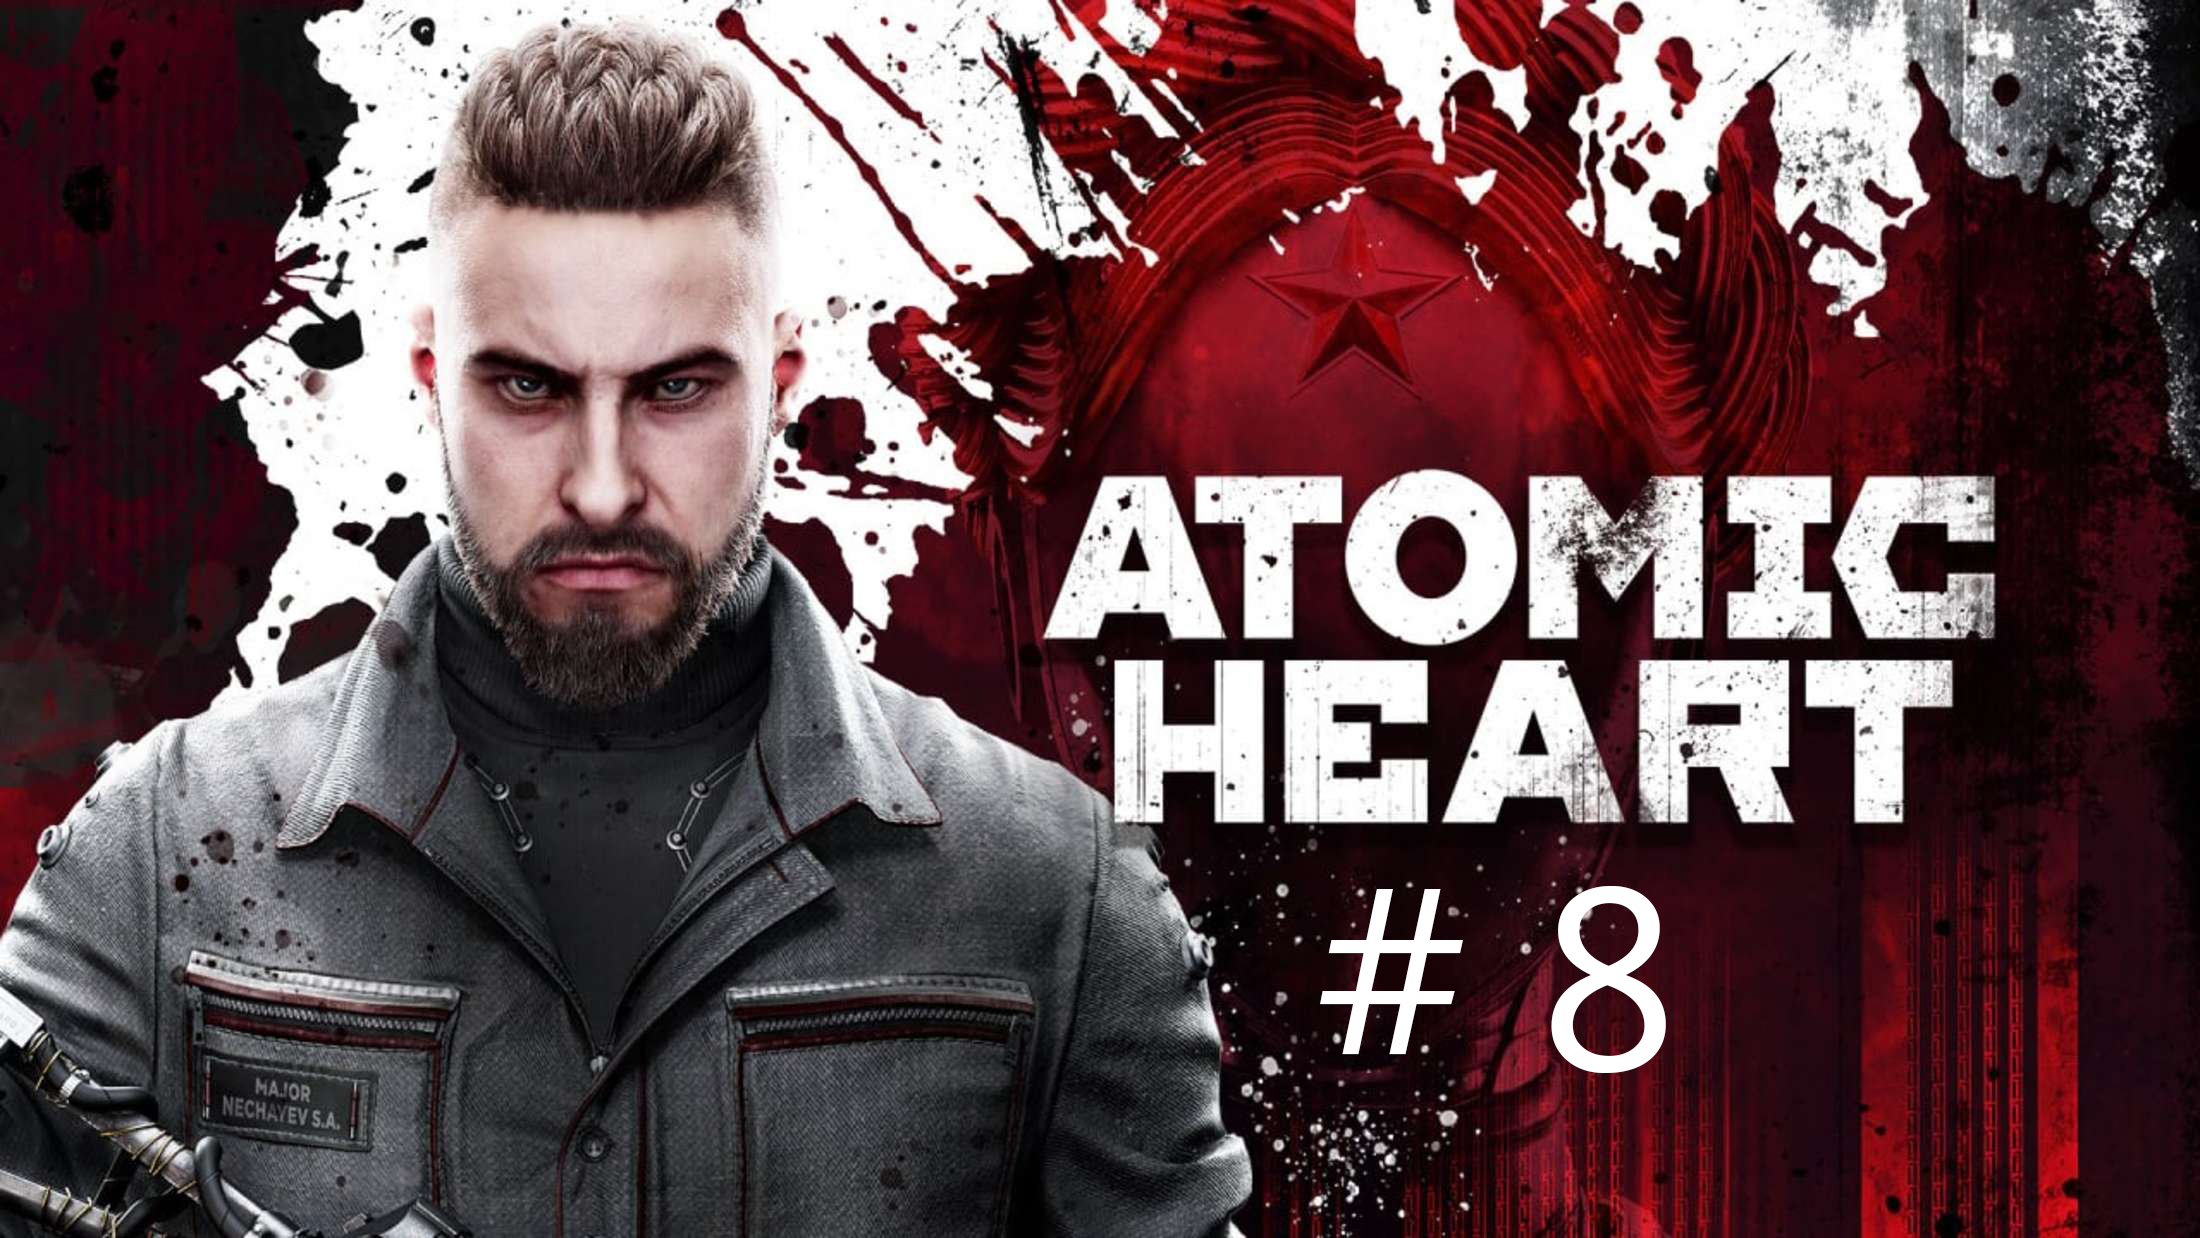 Atomic Heart # 8